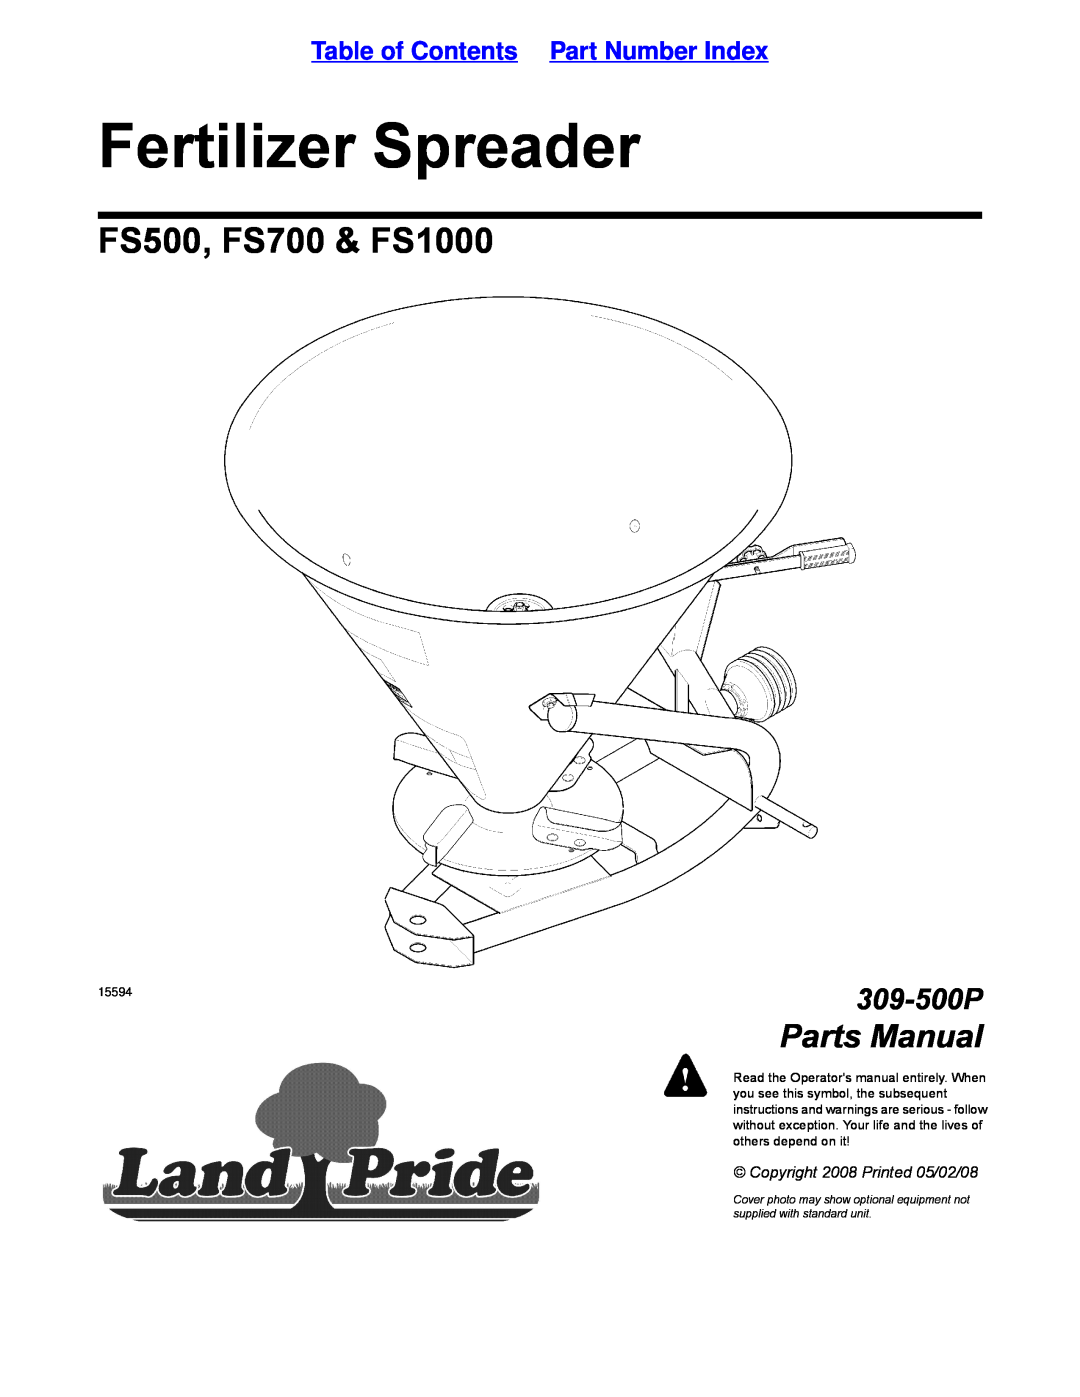 Land Pride manual Table of Contents, Fertilizer Spreaders, FS500, FS700 & FS1000, Operator’s Manual, 309-500M 